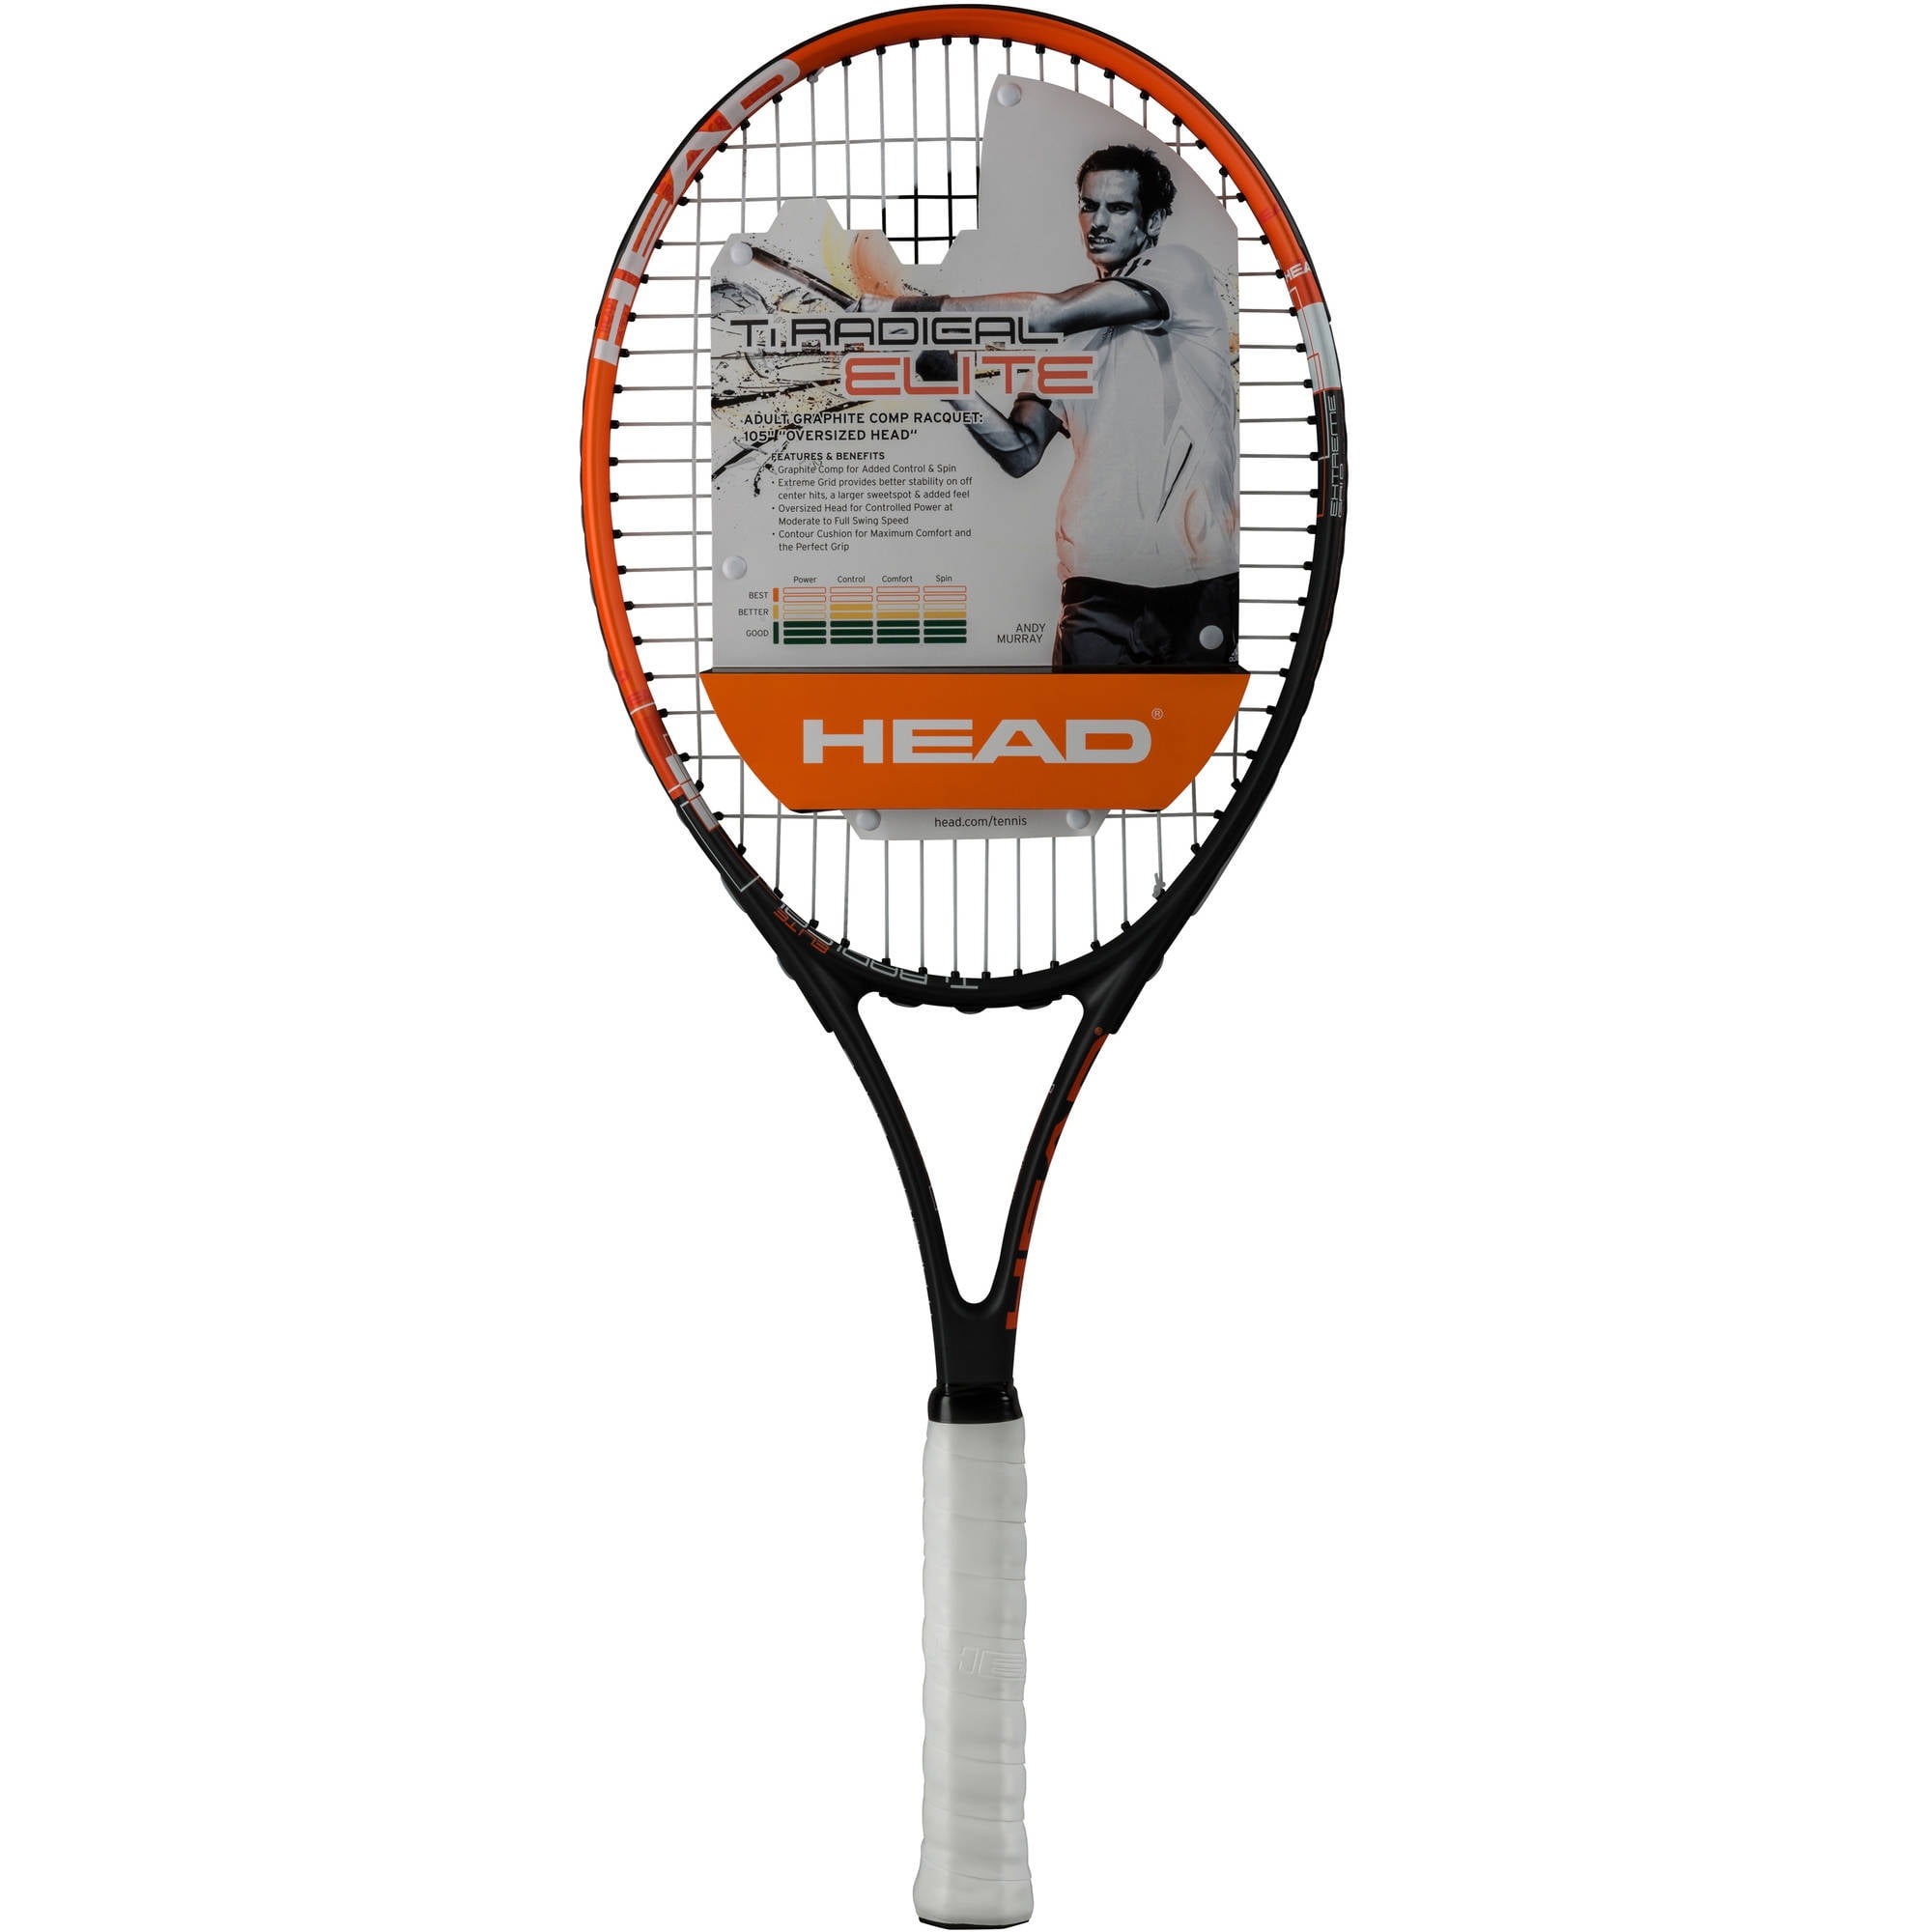 Vader apotheker liefde HEAD Ti. Radical Elite Tennis Racquet, 105 Sq. in. Head Size, 9.3 Ounces,  Black/Red - Walmart.com